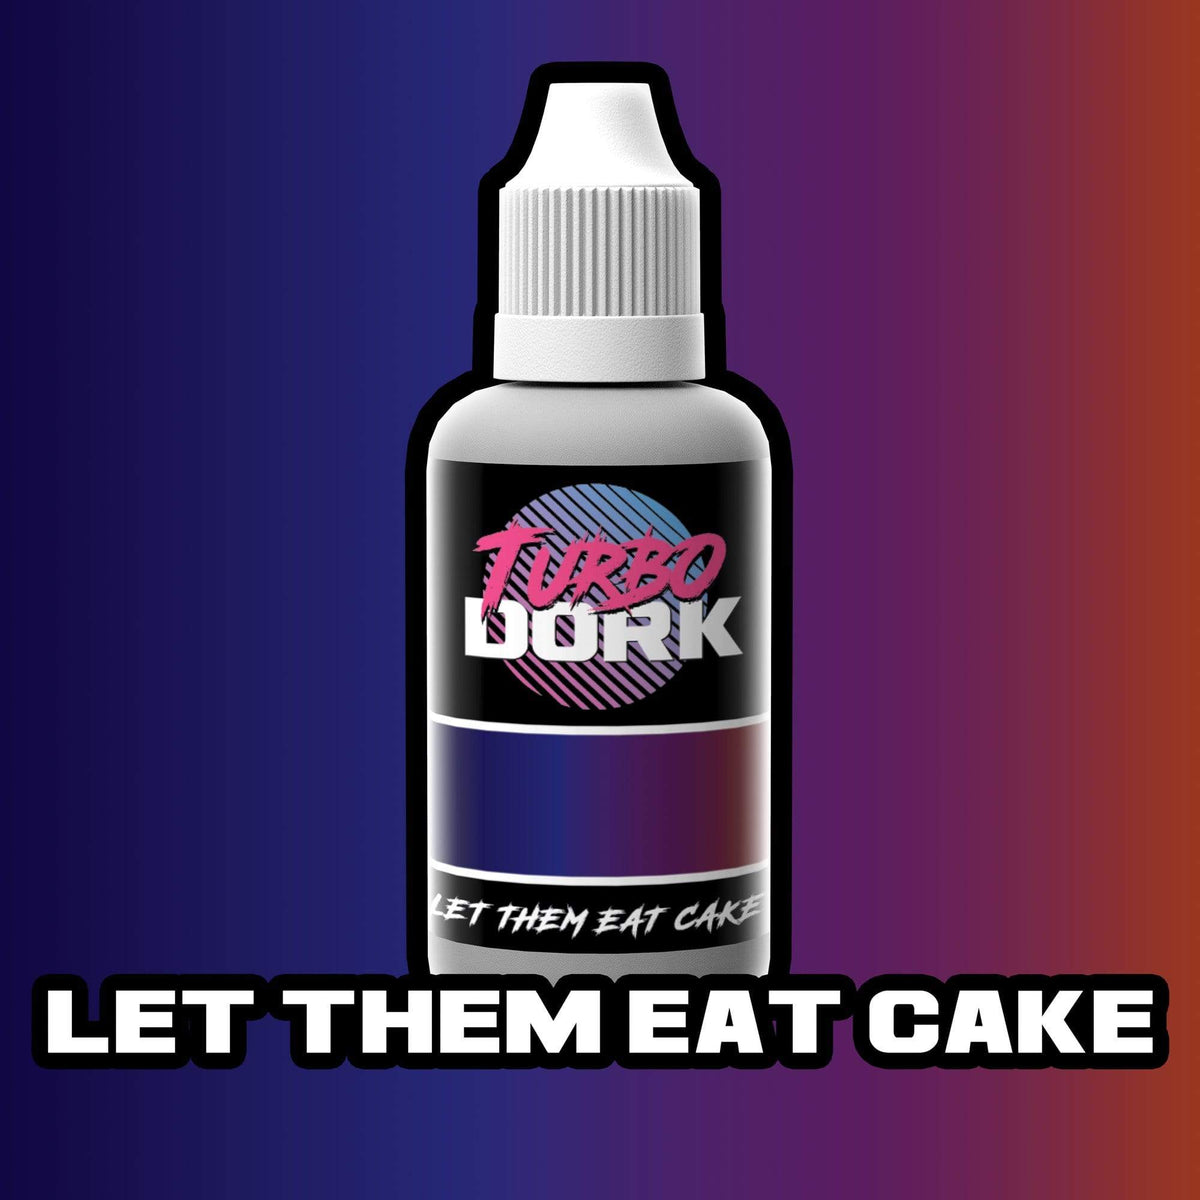 Let Them Eat Cake Colorshift Acrylic Paint Turboshift Turbo Dork Exit 23 Games Let Them Eat Cake Colorshift Acrylic Paint